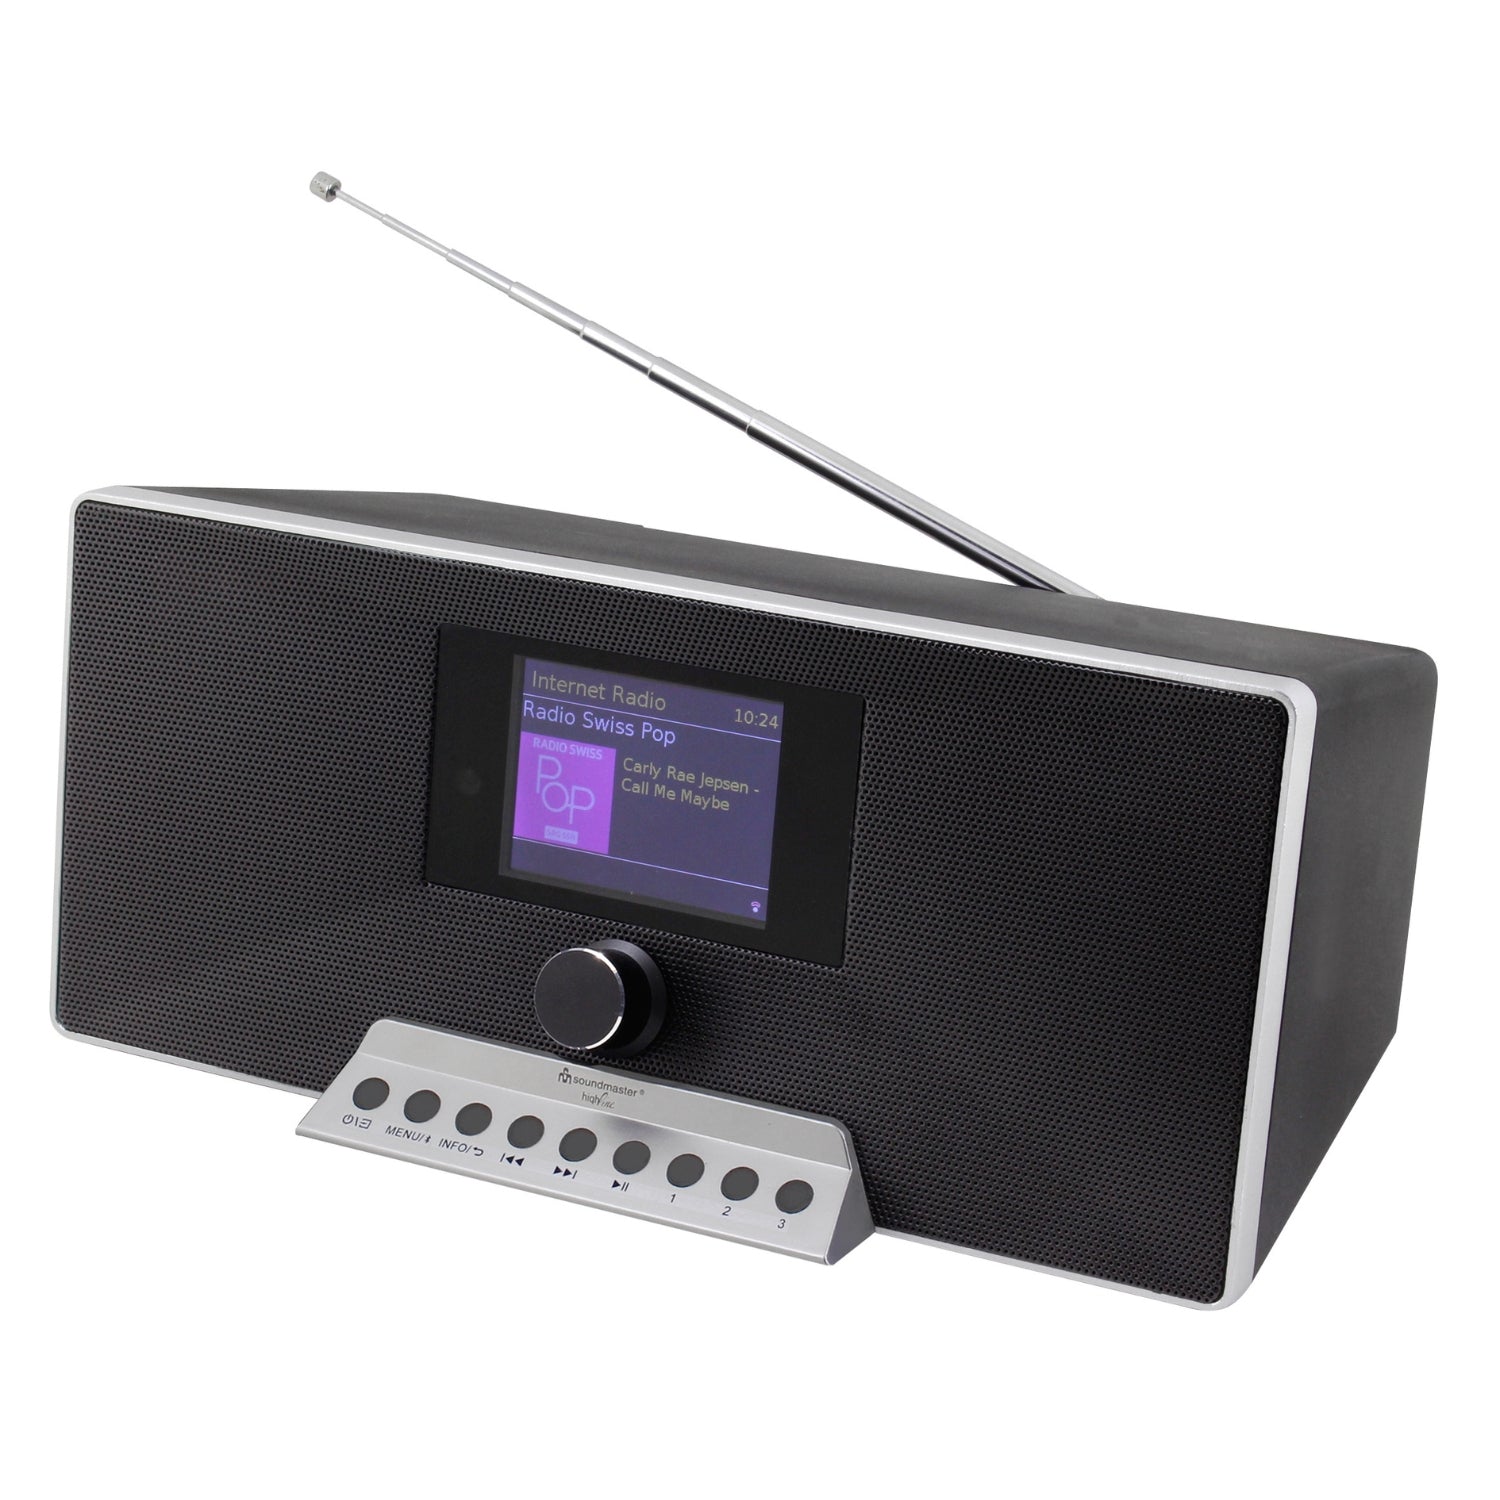 Soundmaster HighLine IR3500SW Internet radio DAB+ Bluetooth Spotify UNDOK app control